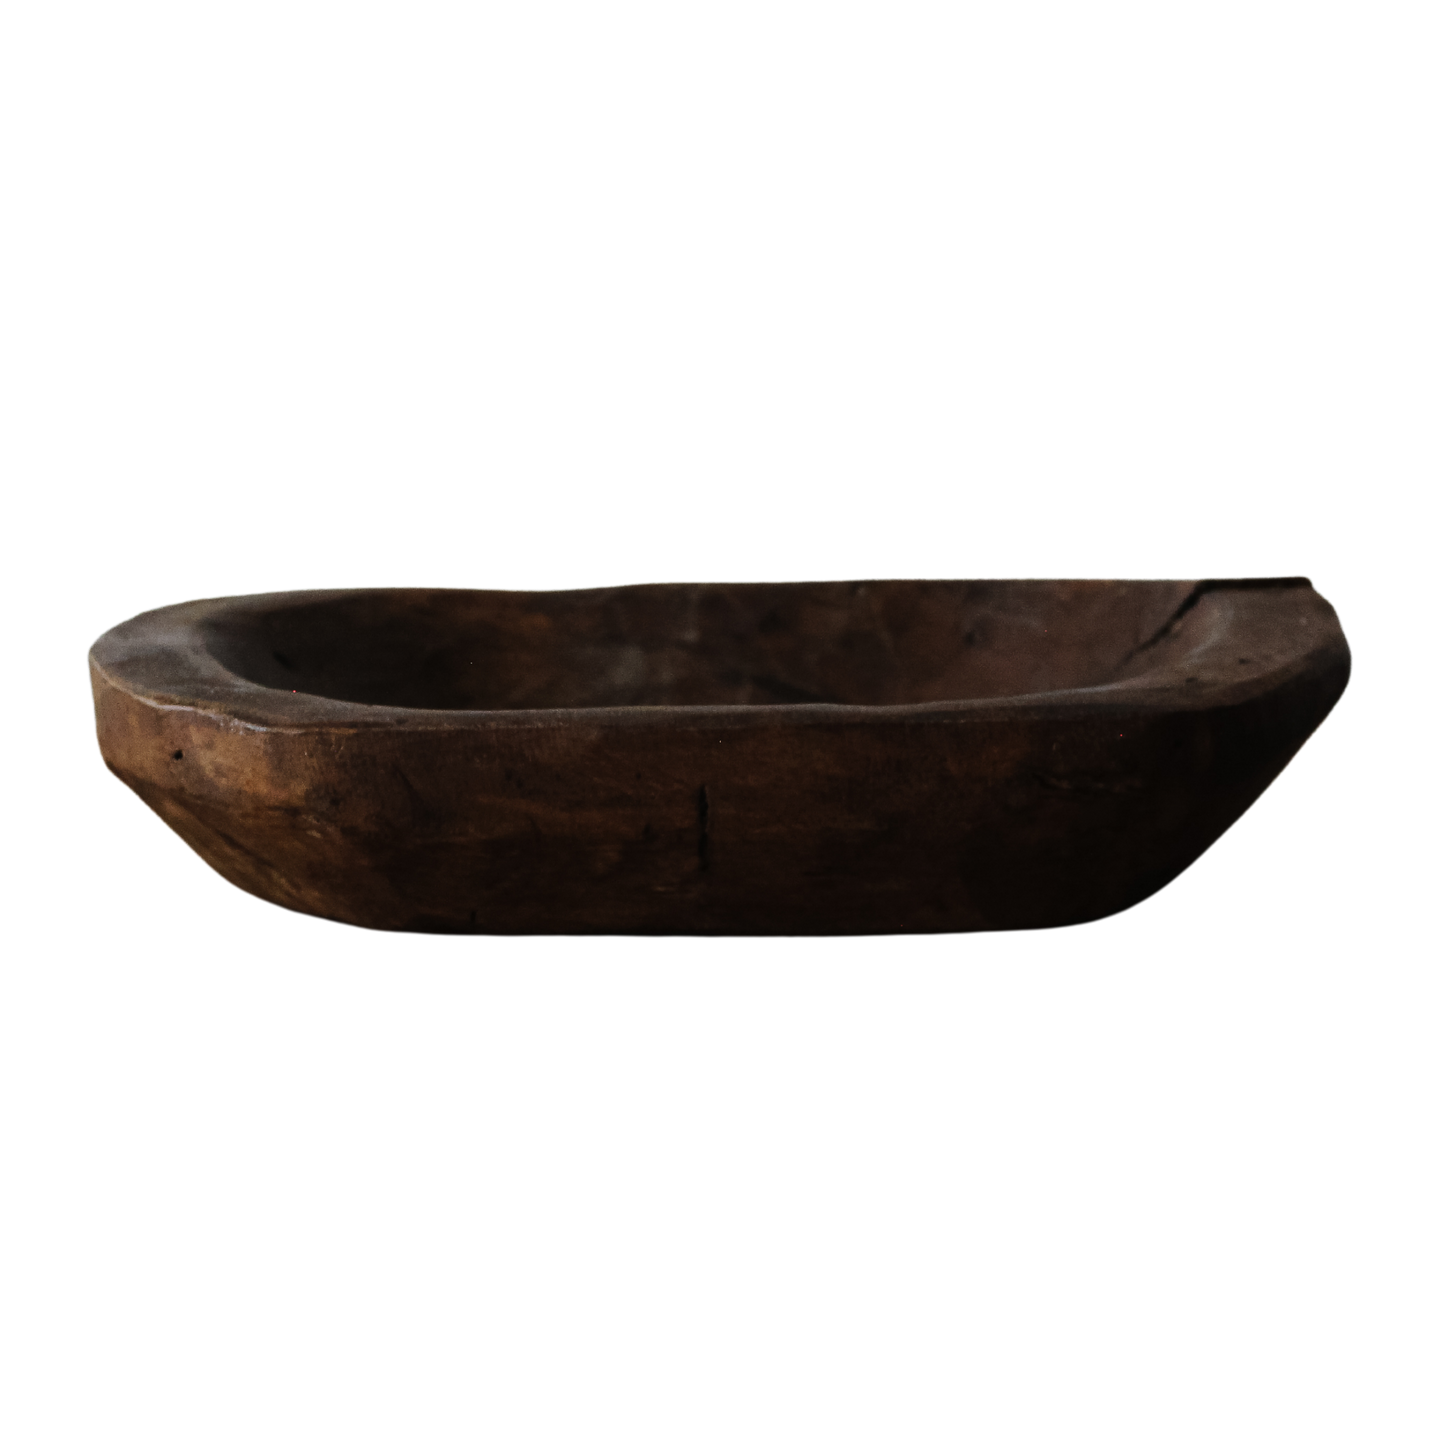 Found Carved Bowl